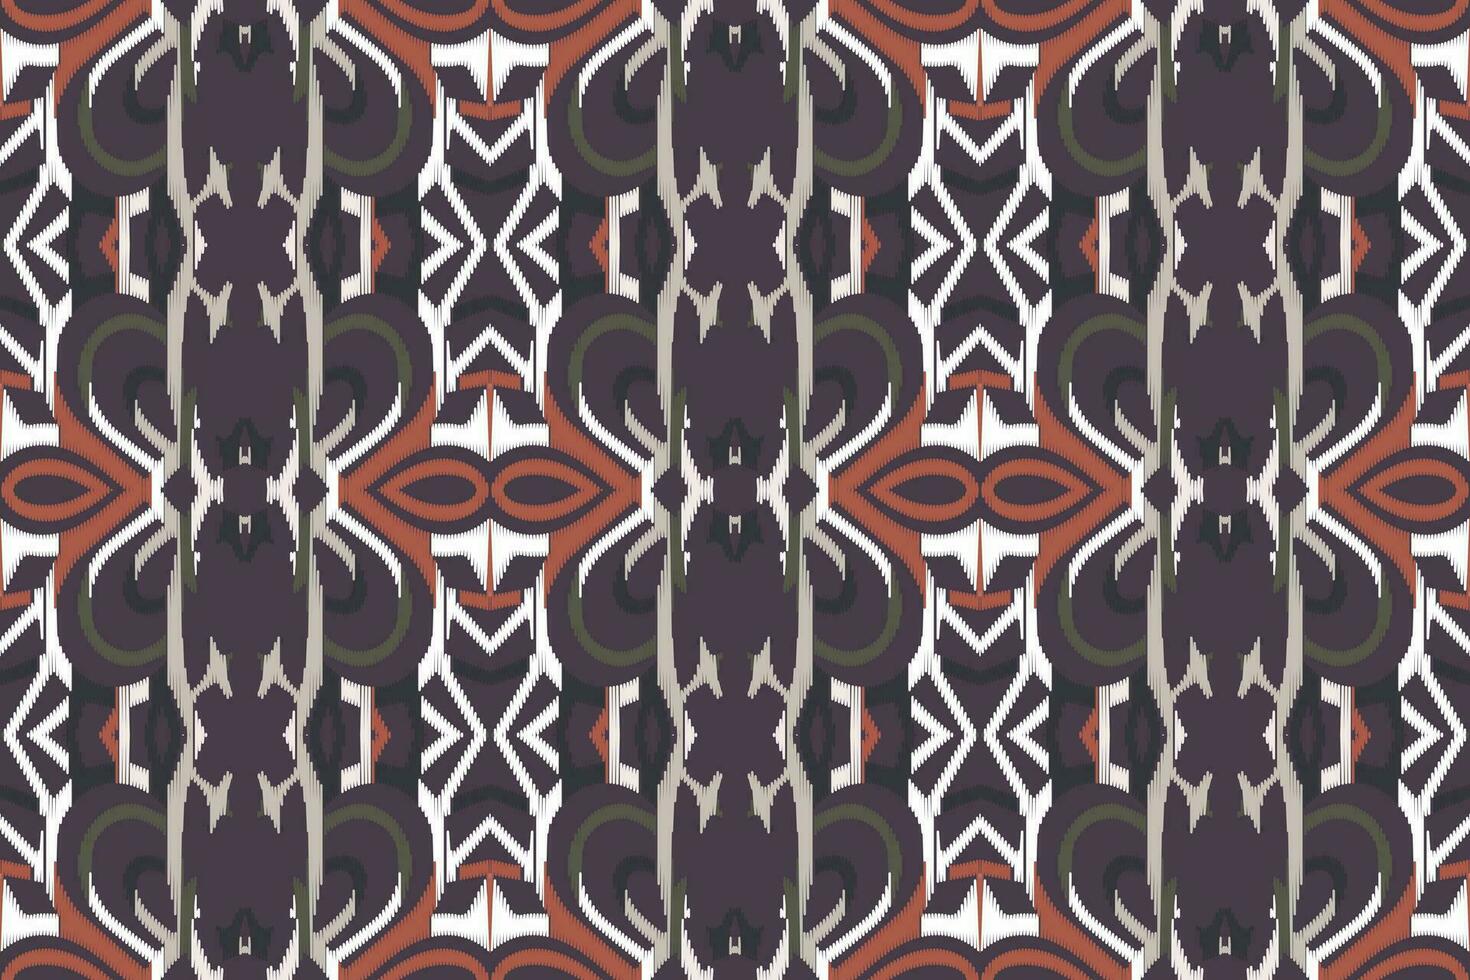 ikat damasco cachemir bordado antecedentes. ikat modelo geométrico étnico oriental modelo tradicional.azteca estilo resumen vector ilustración.diseño para textura,tela,ropa,envoltura,pareo.